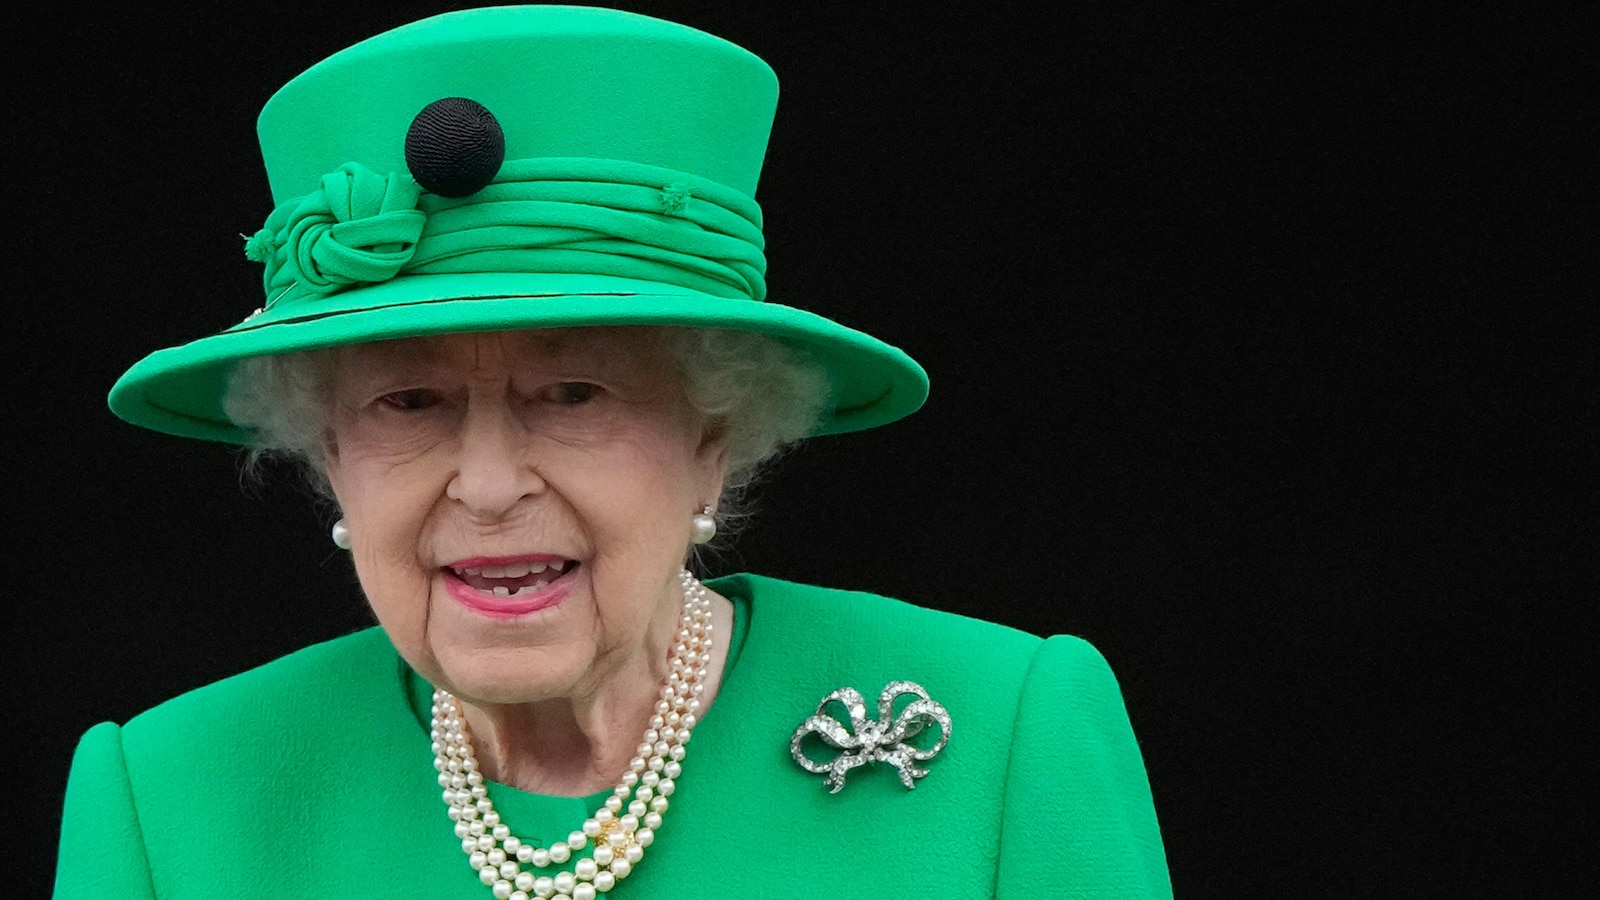 Fraudster Sentenced for Falsely Selling Queen Elizabeth II's Walking Stick